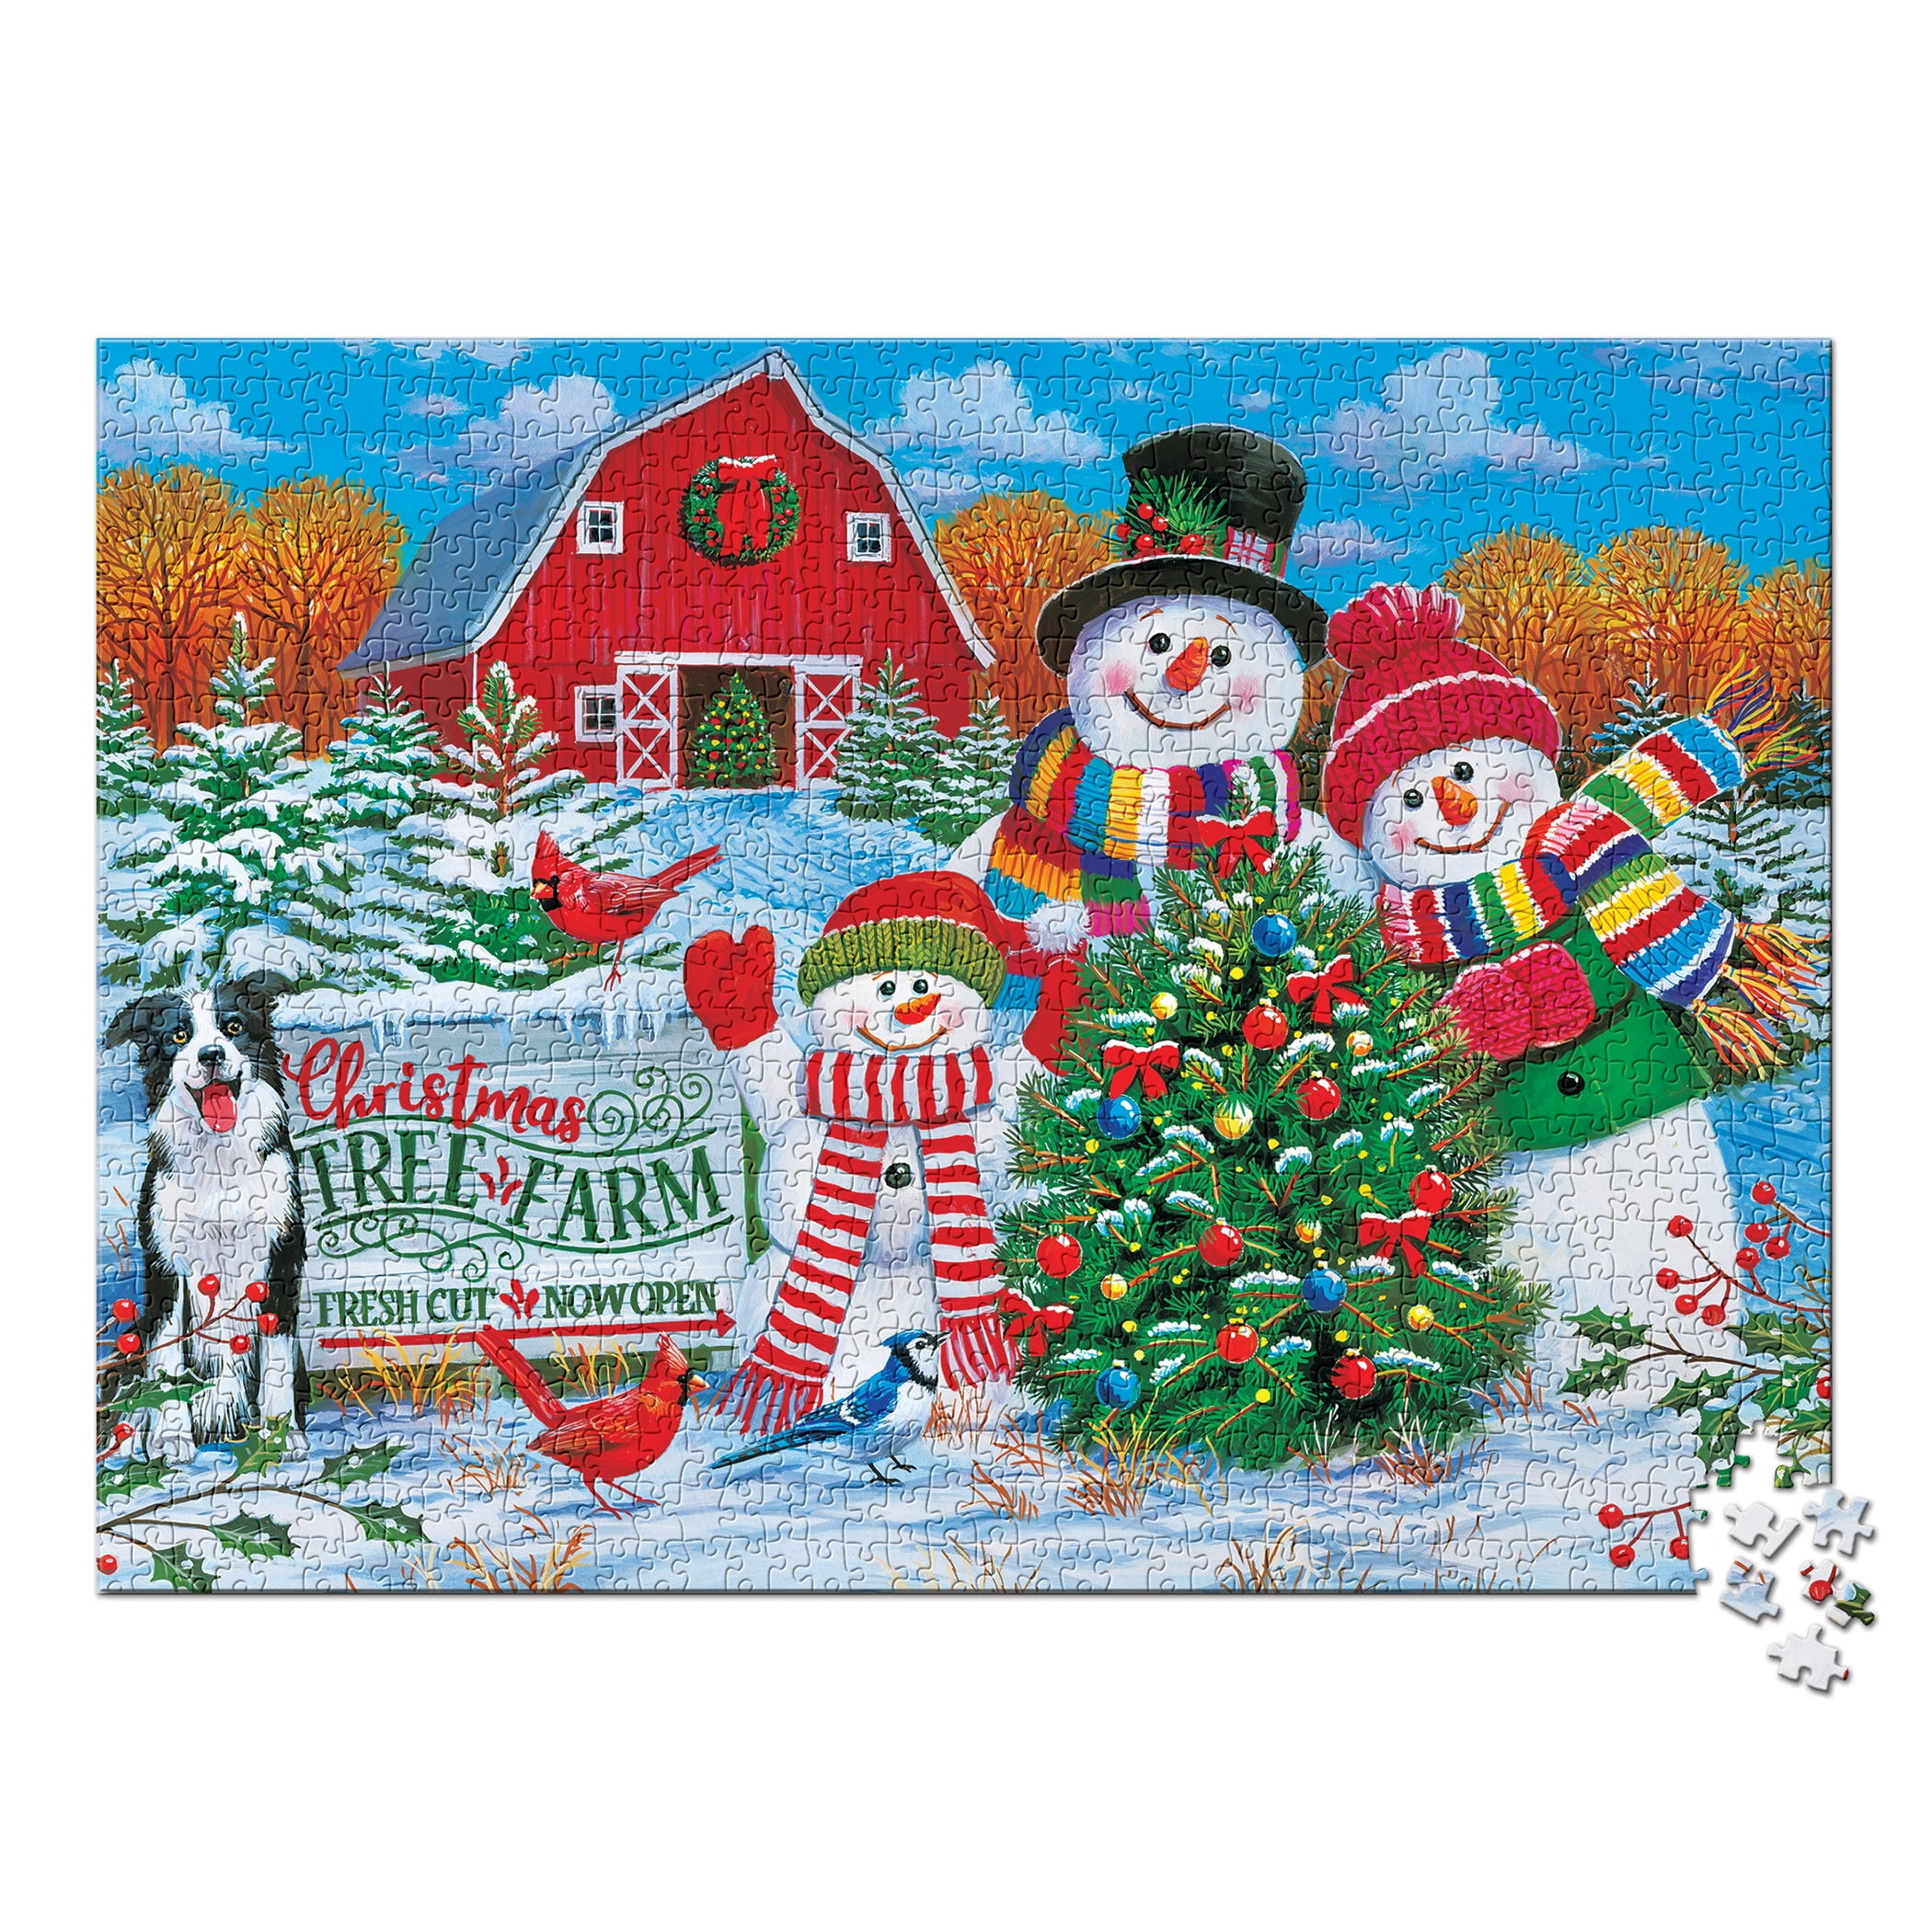 Santa w/ Bag of Toys & Reindeer 550 Piece Christmas Jigsaw Puzzle NEW Ceaco 